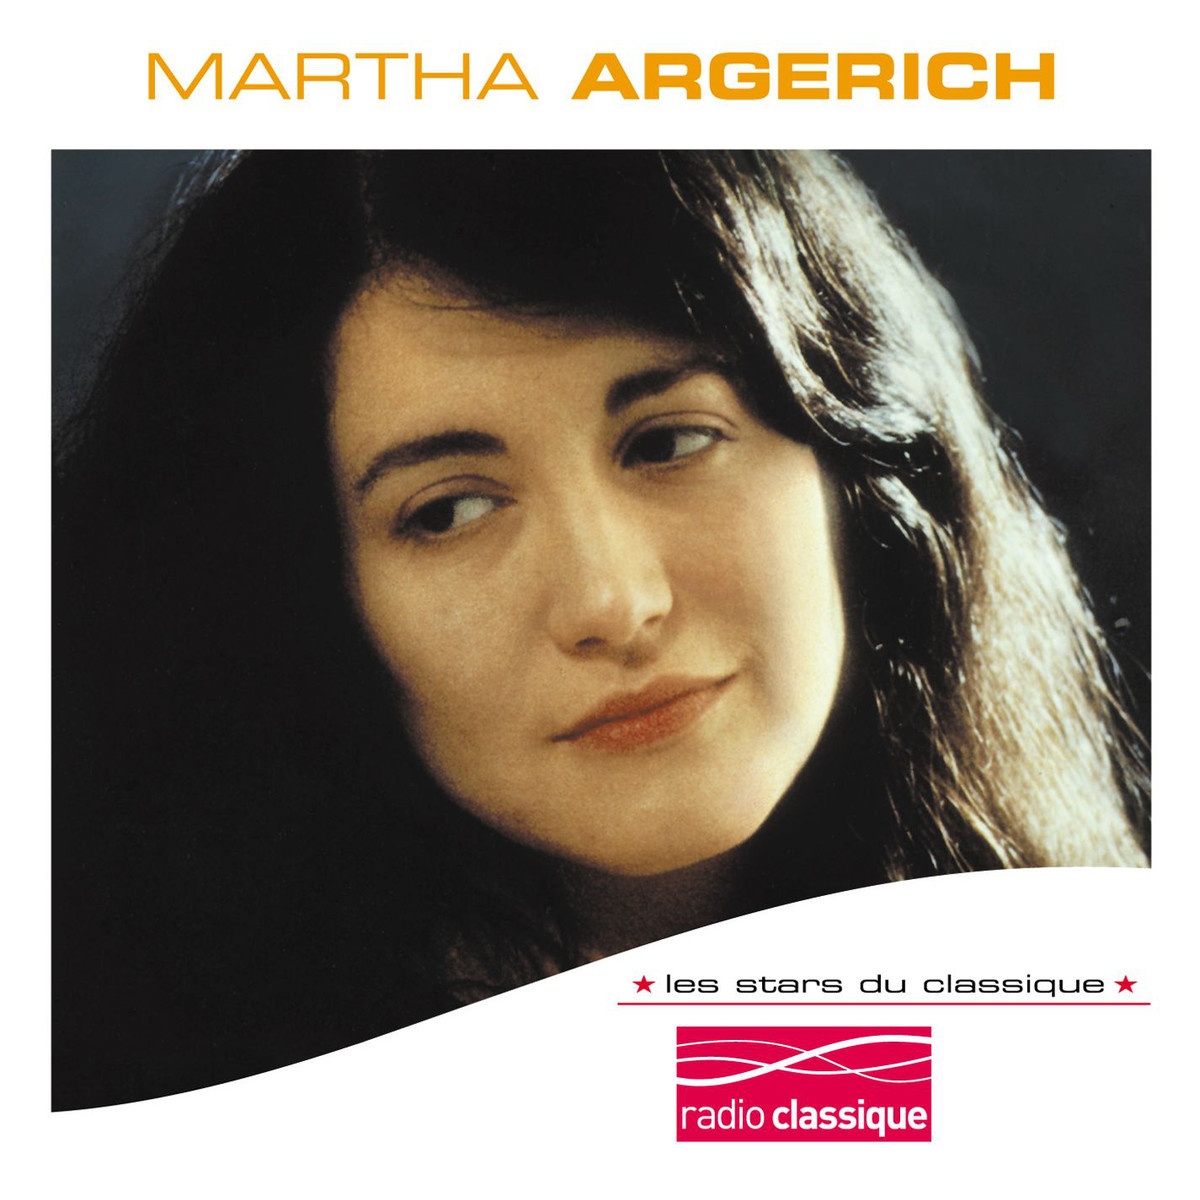 Mazurka No. 37 in A Flat, Op.59 No. 2 (1999 Digital Remaster)